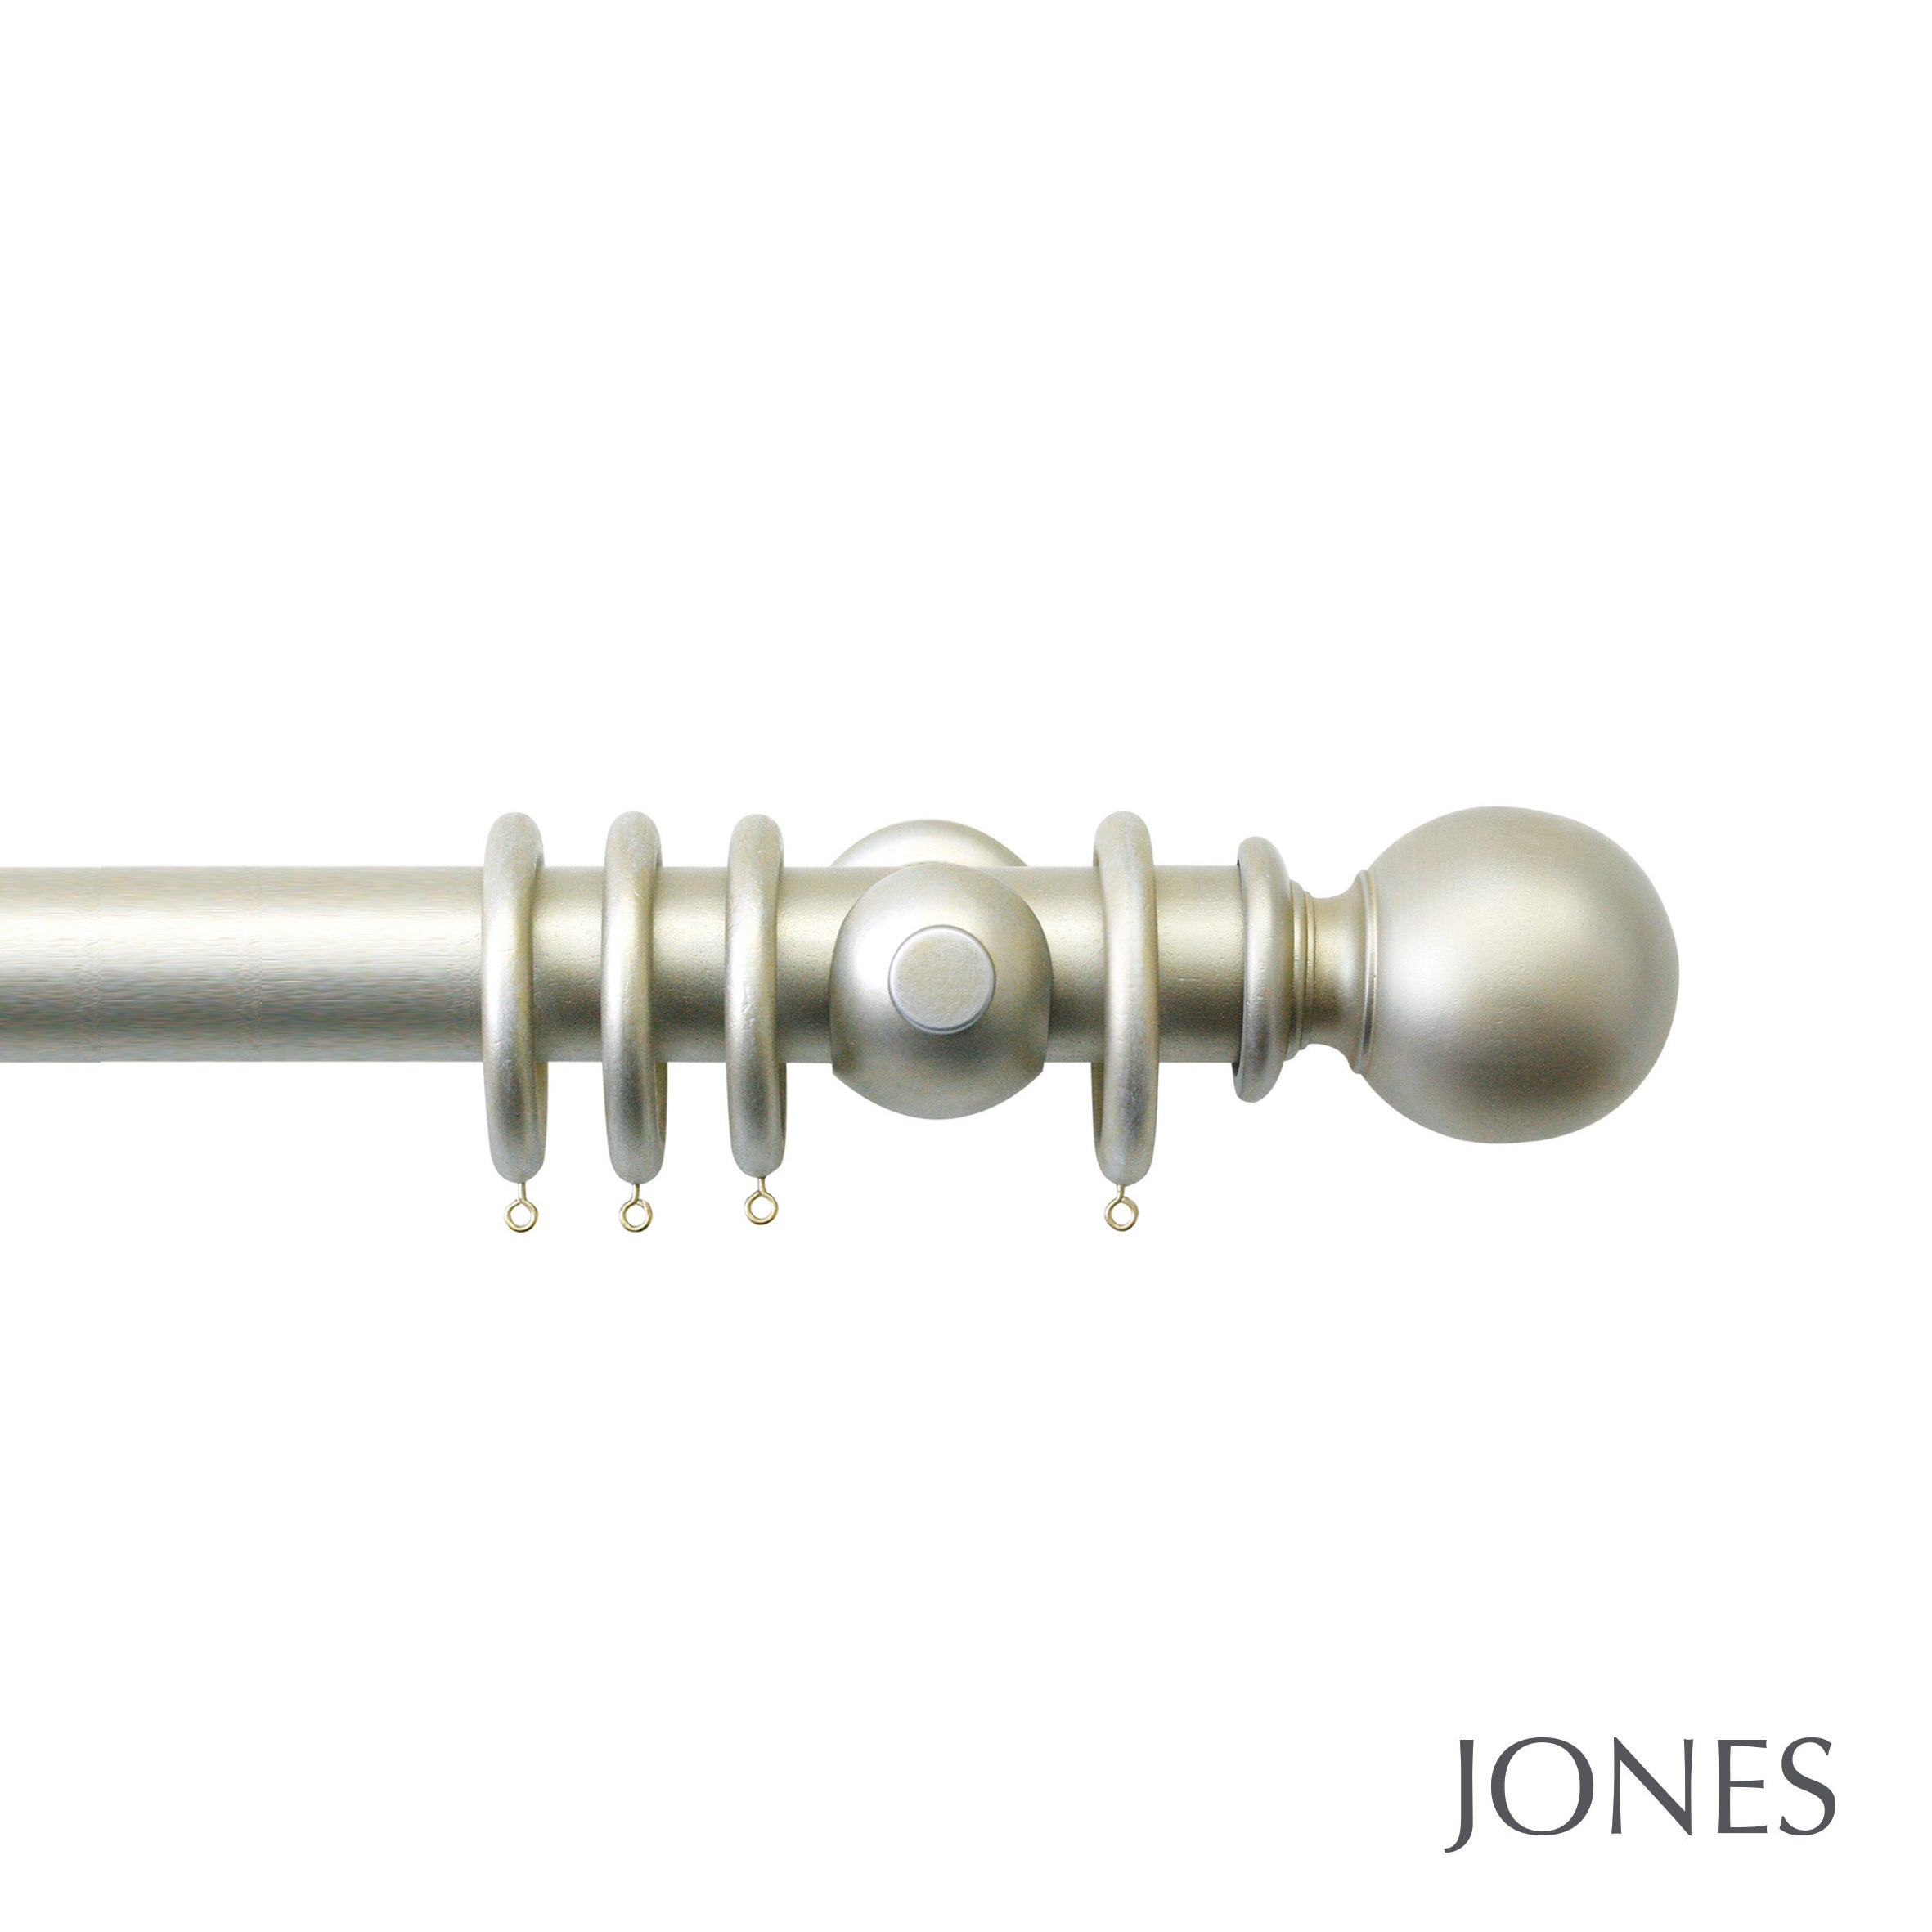 Jones Interiors Grande Ball Finial Curtain Pole Set in Champagne Silver